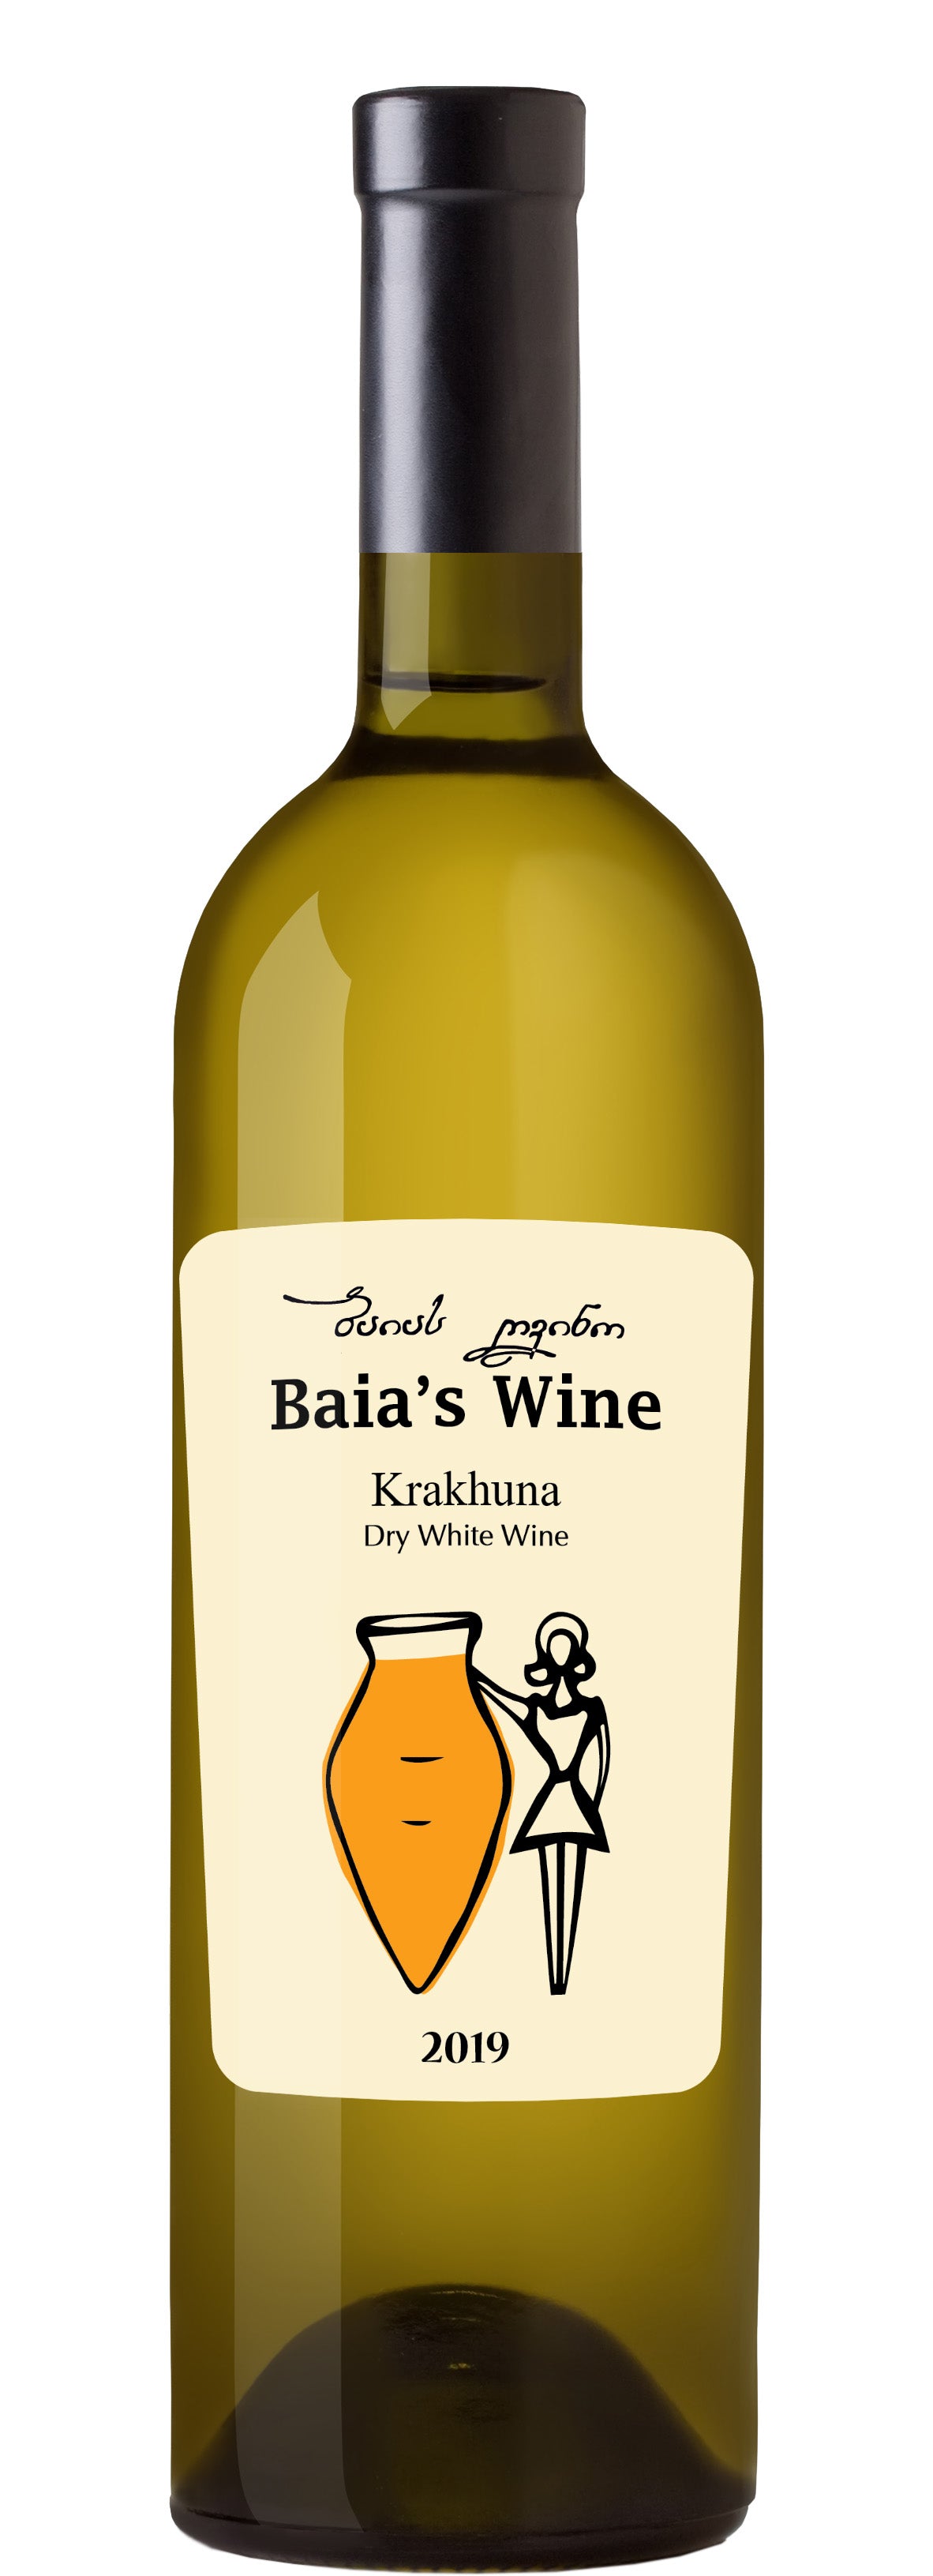 Baia's Wein, Krakhuna, trockener Weißwein, 2019